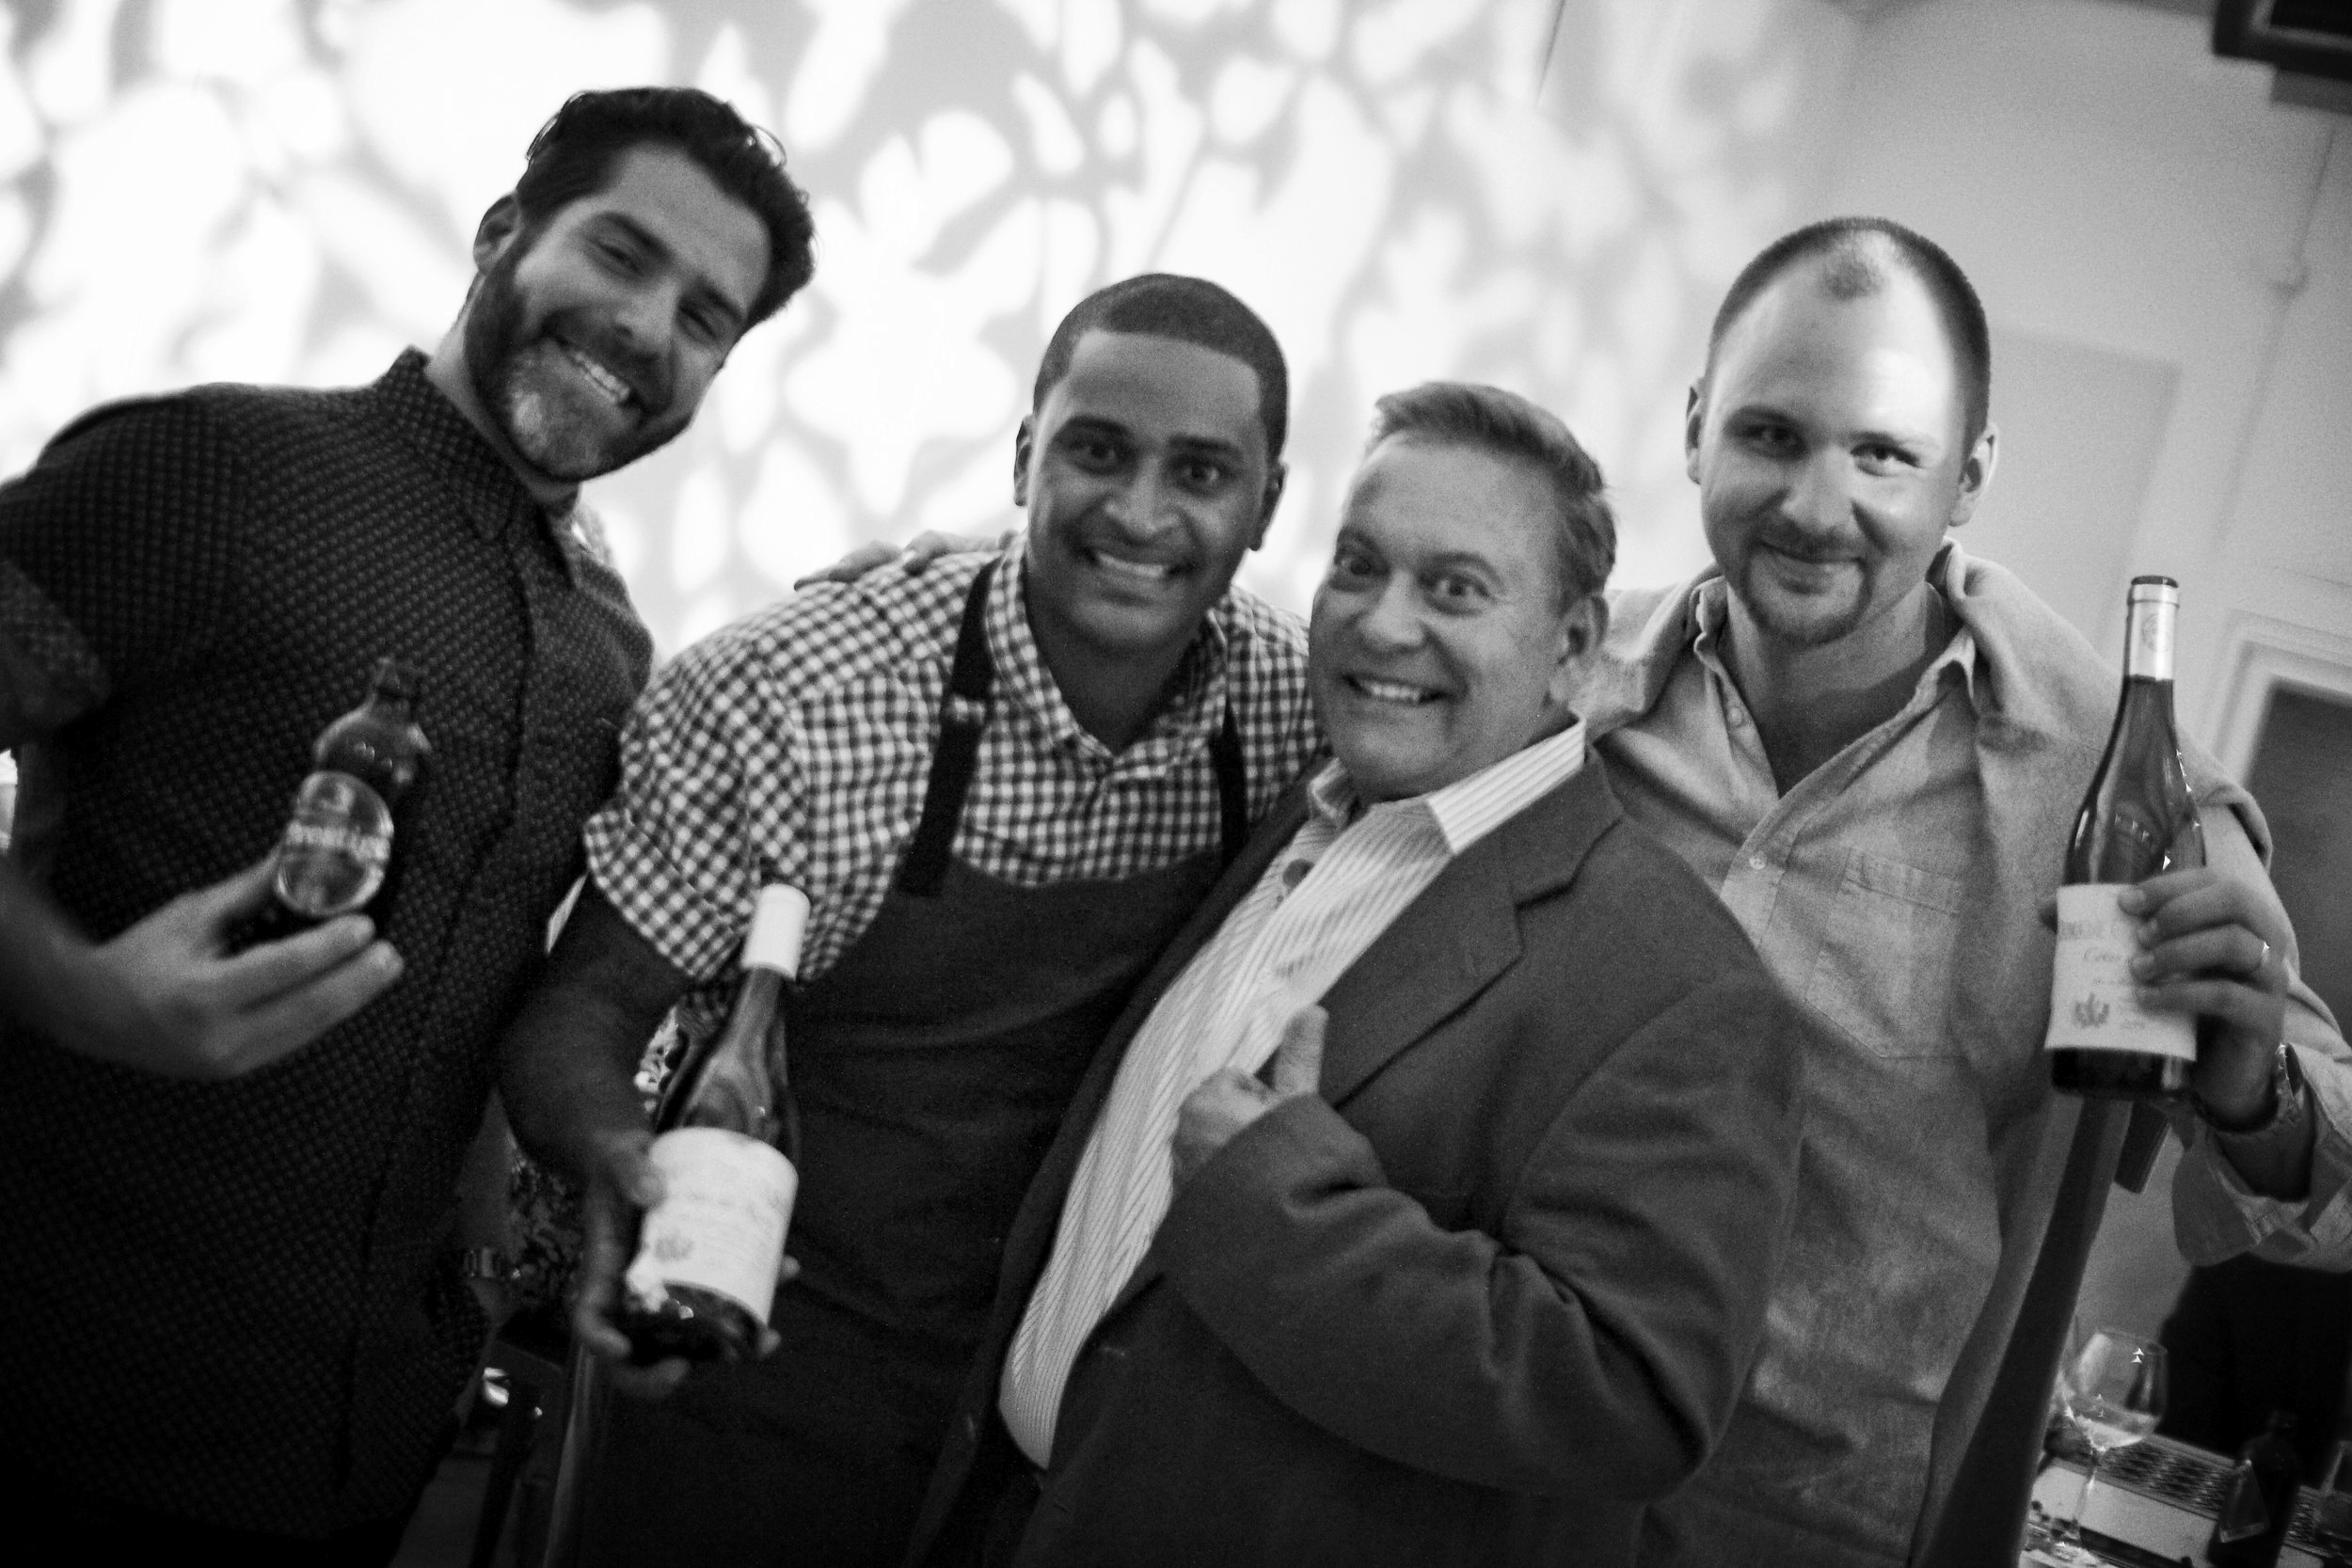 Chef JJ with Team Thierry: Peter Key, David Johnson & Alex Lipin